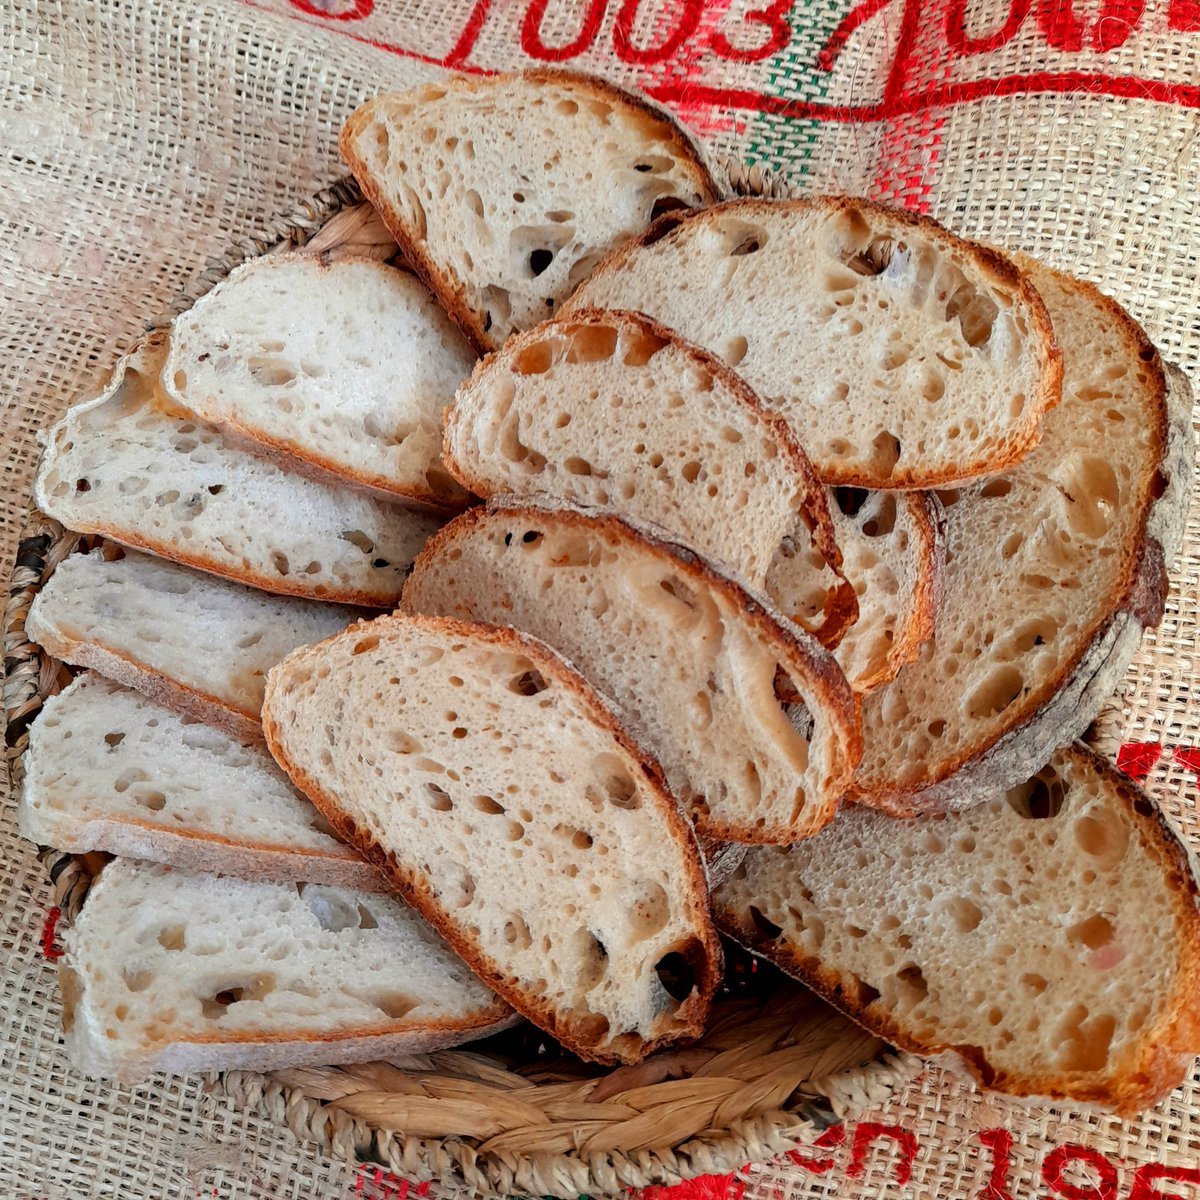 #sourdoughseptember #bread #realbread #breadheroes21 #microbakery #cumbria #notjustlakes #flourwatersalt #naturalfermentation